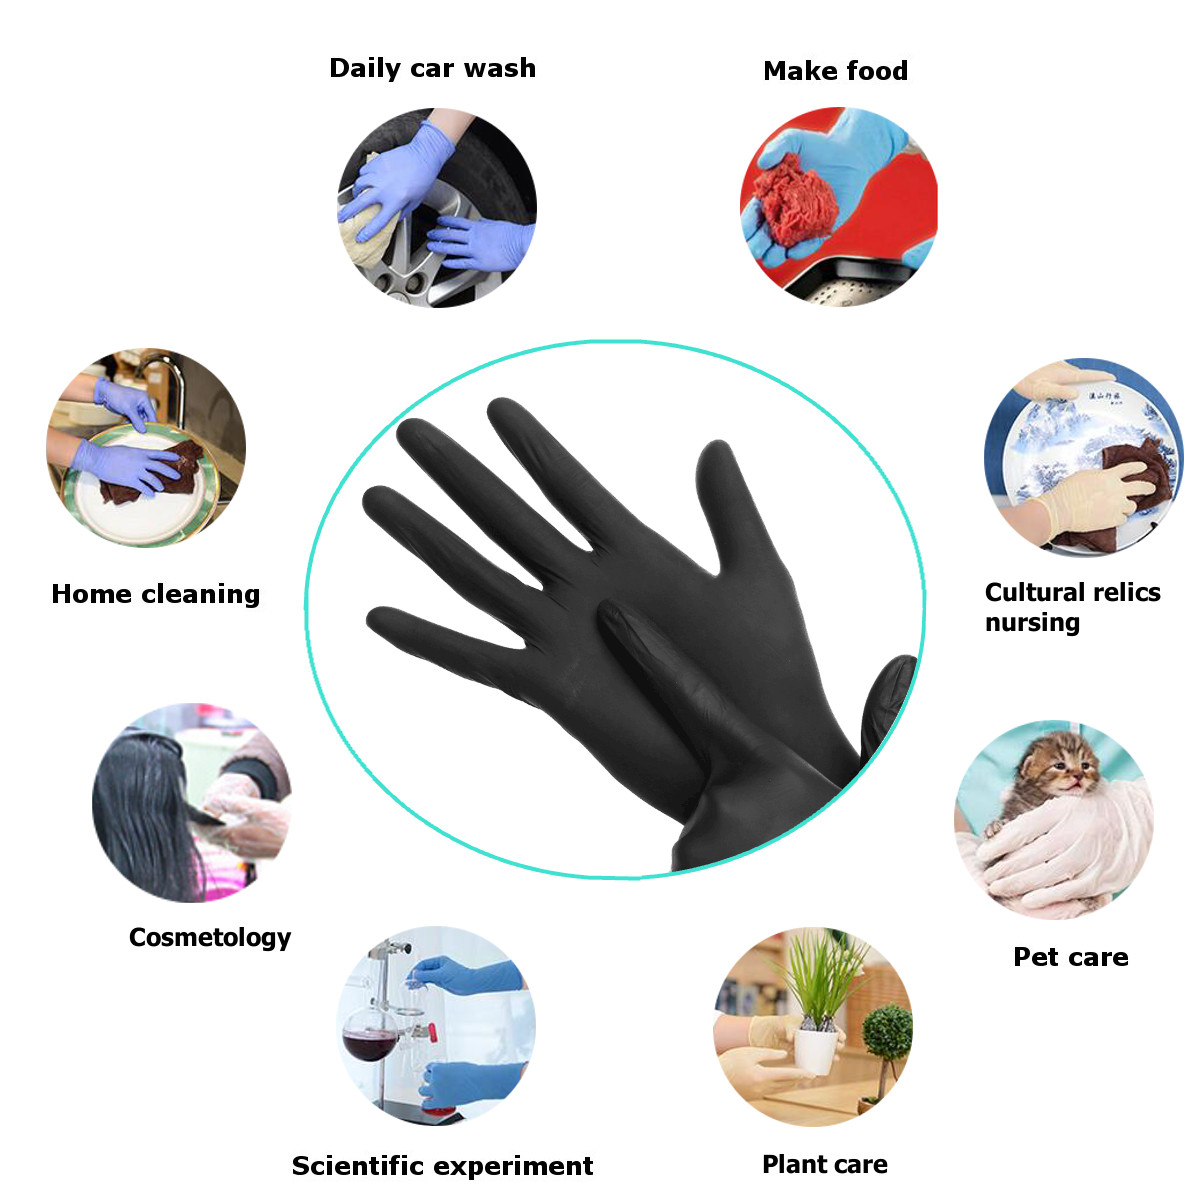 100pcs-Industrial-Disposable-Nitrile-Latex-Black-Gloves-Powder-Free-MLXL-1208723